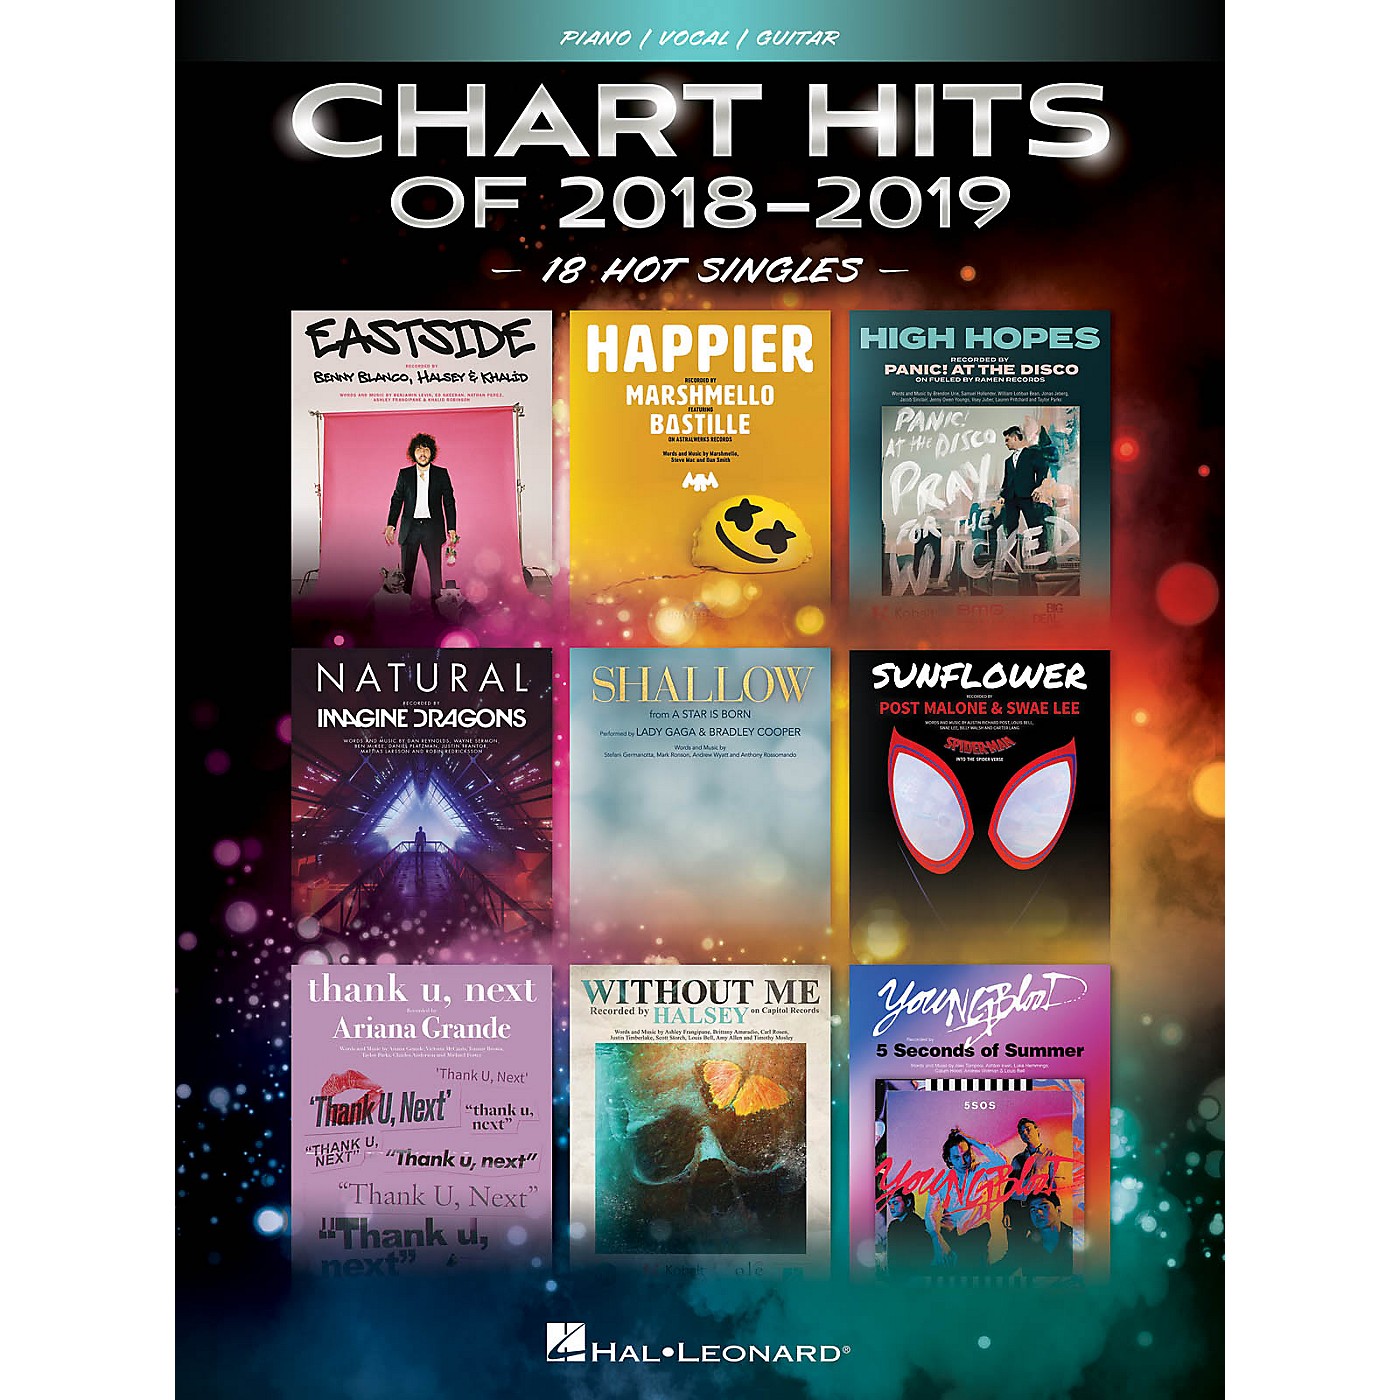 Hal Leonard Chart Hits of 2018-2019 (18 Hot Singles) Piano/Vocal/Guitar Songbook thumbnail